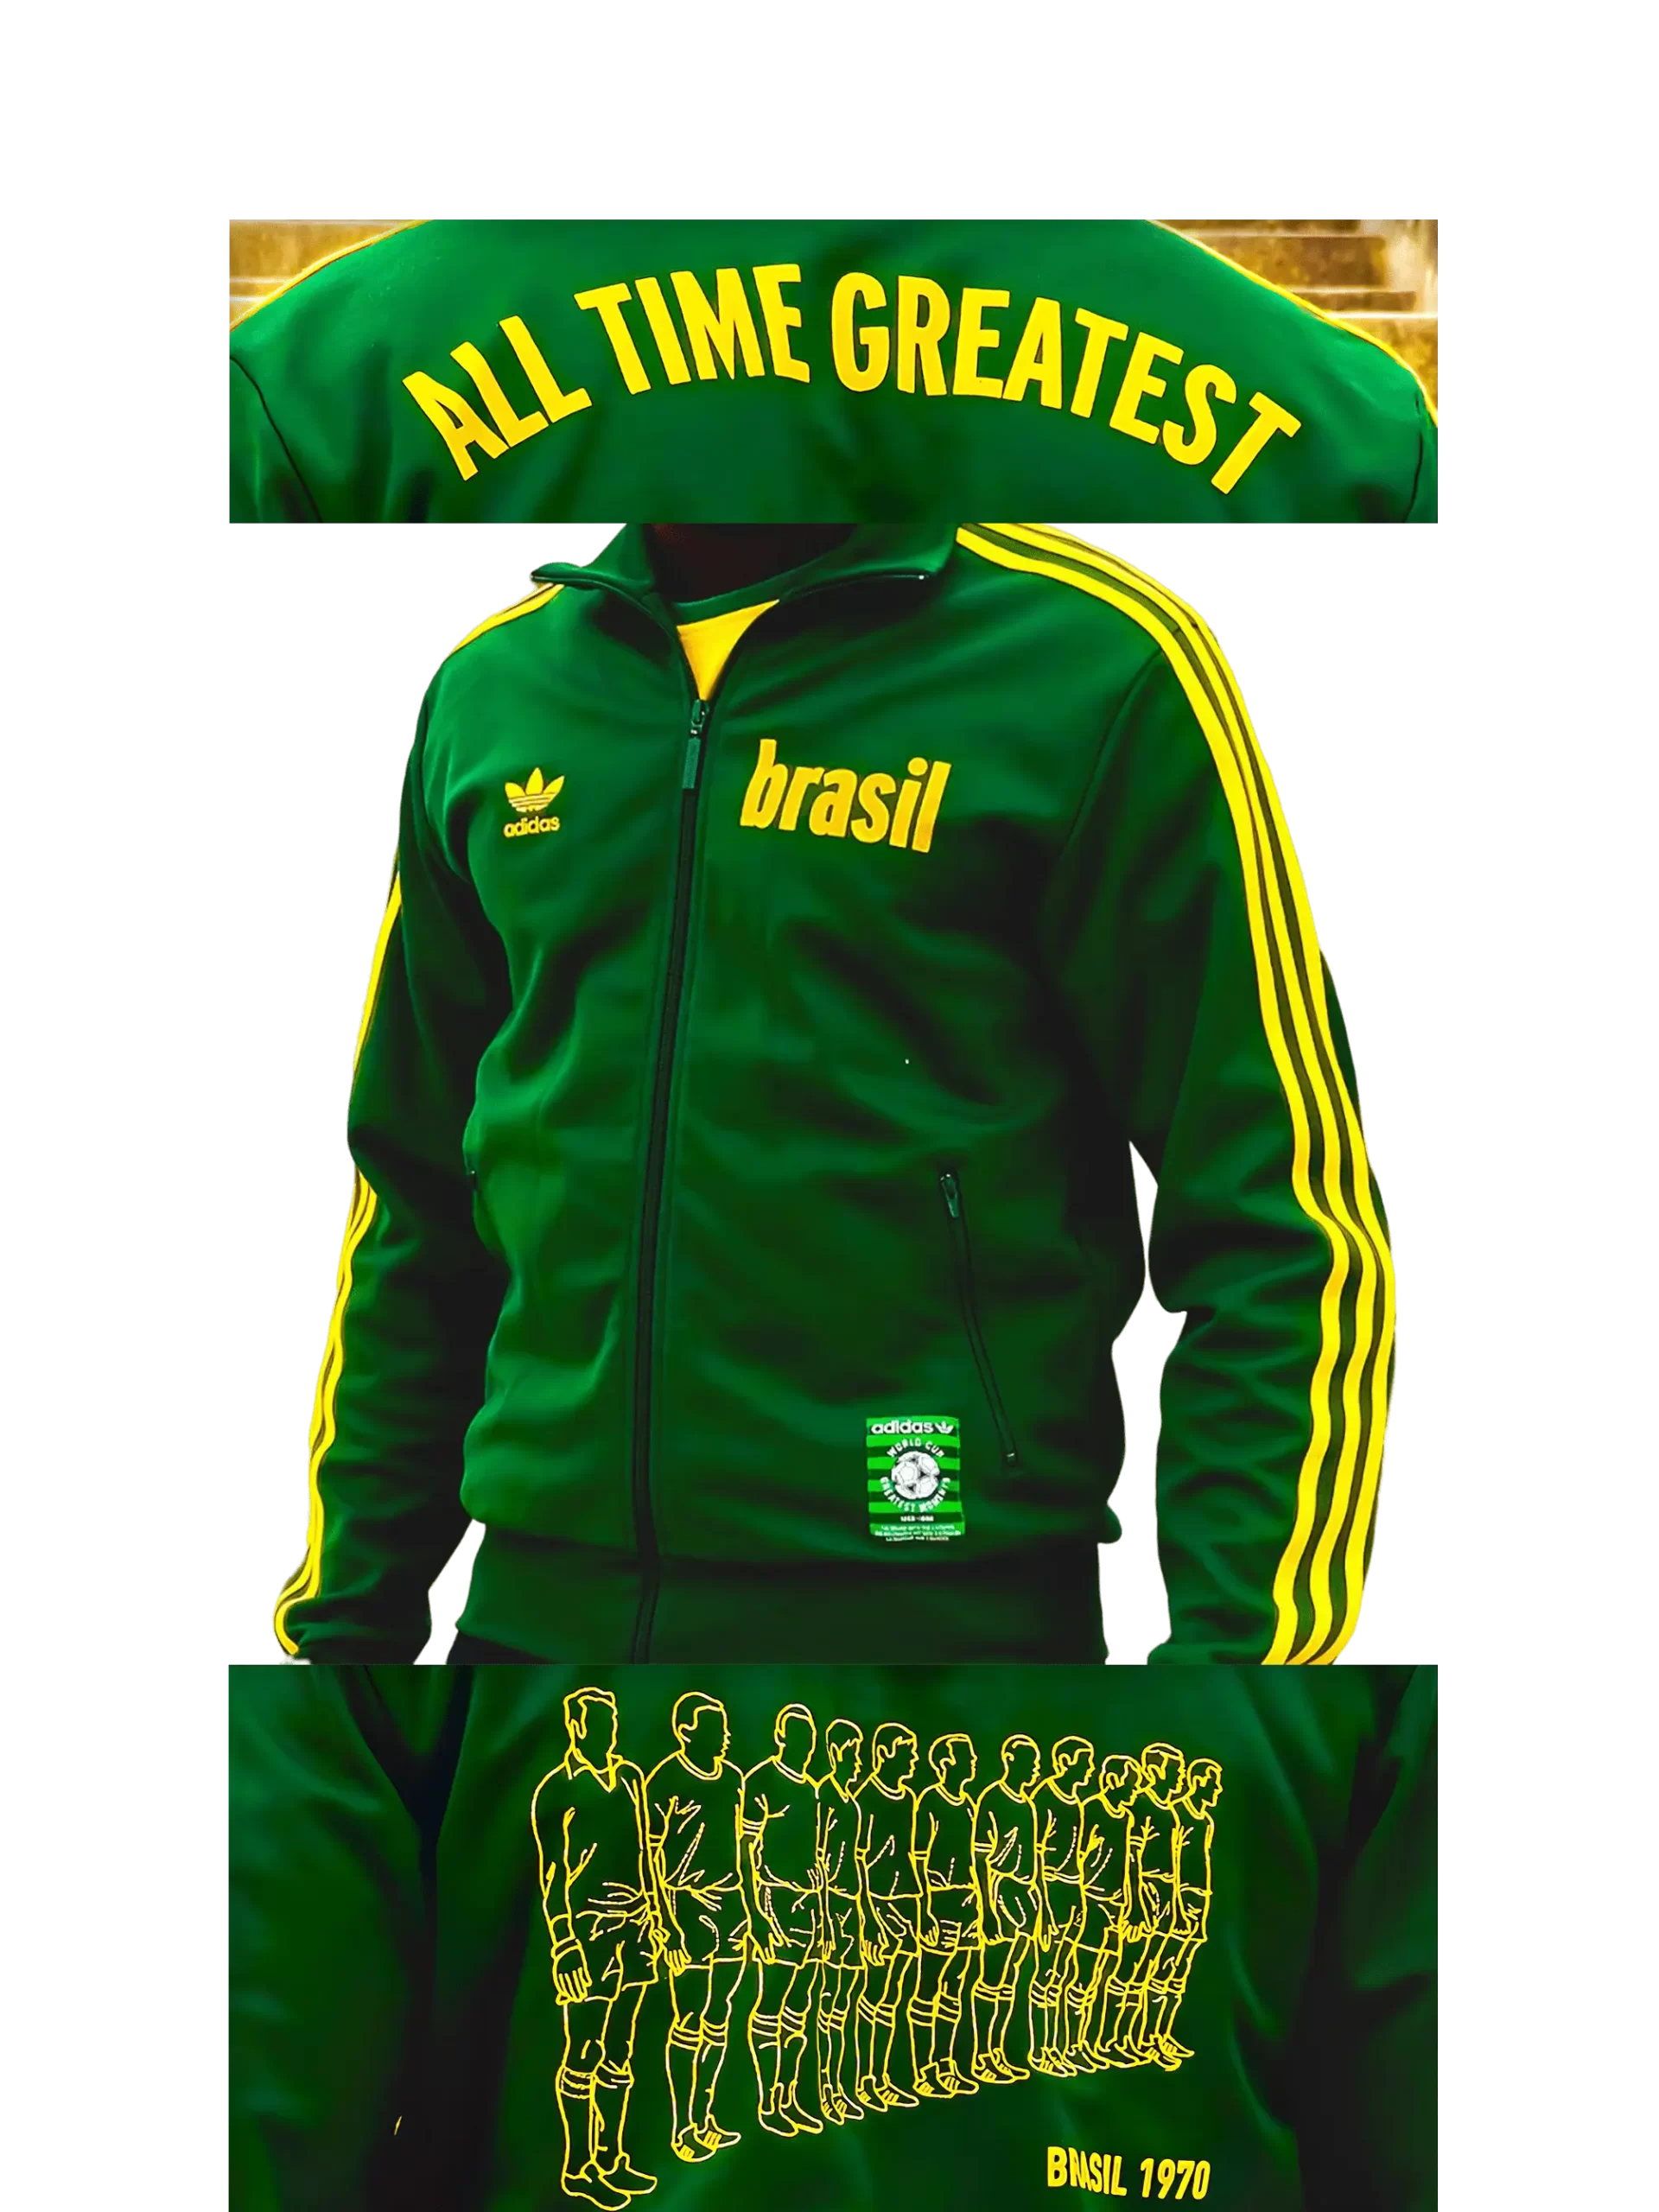 Adidas Brazil National Team Tracksuit Jacket Yellow Green Mens Size M